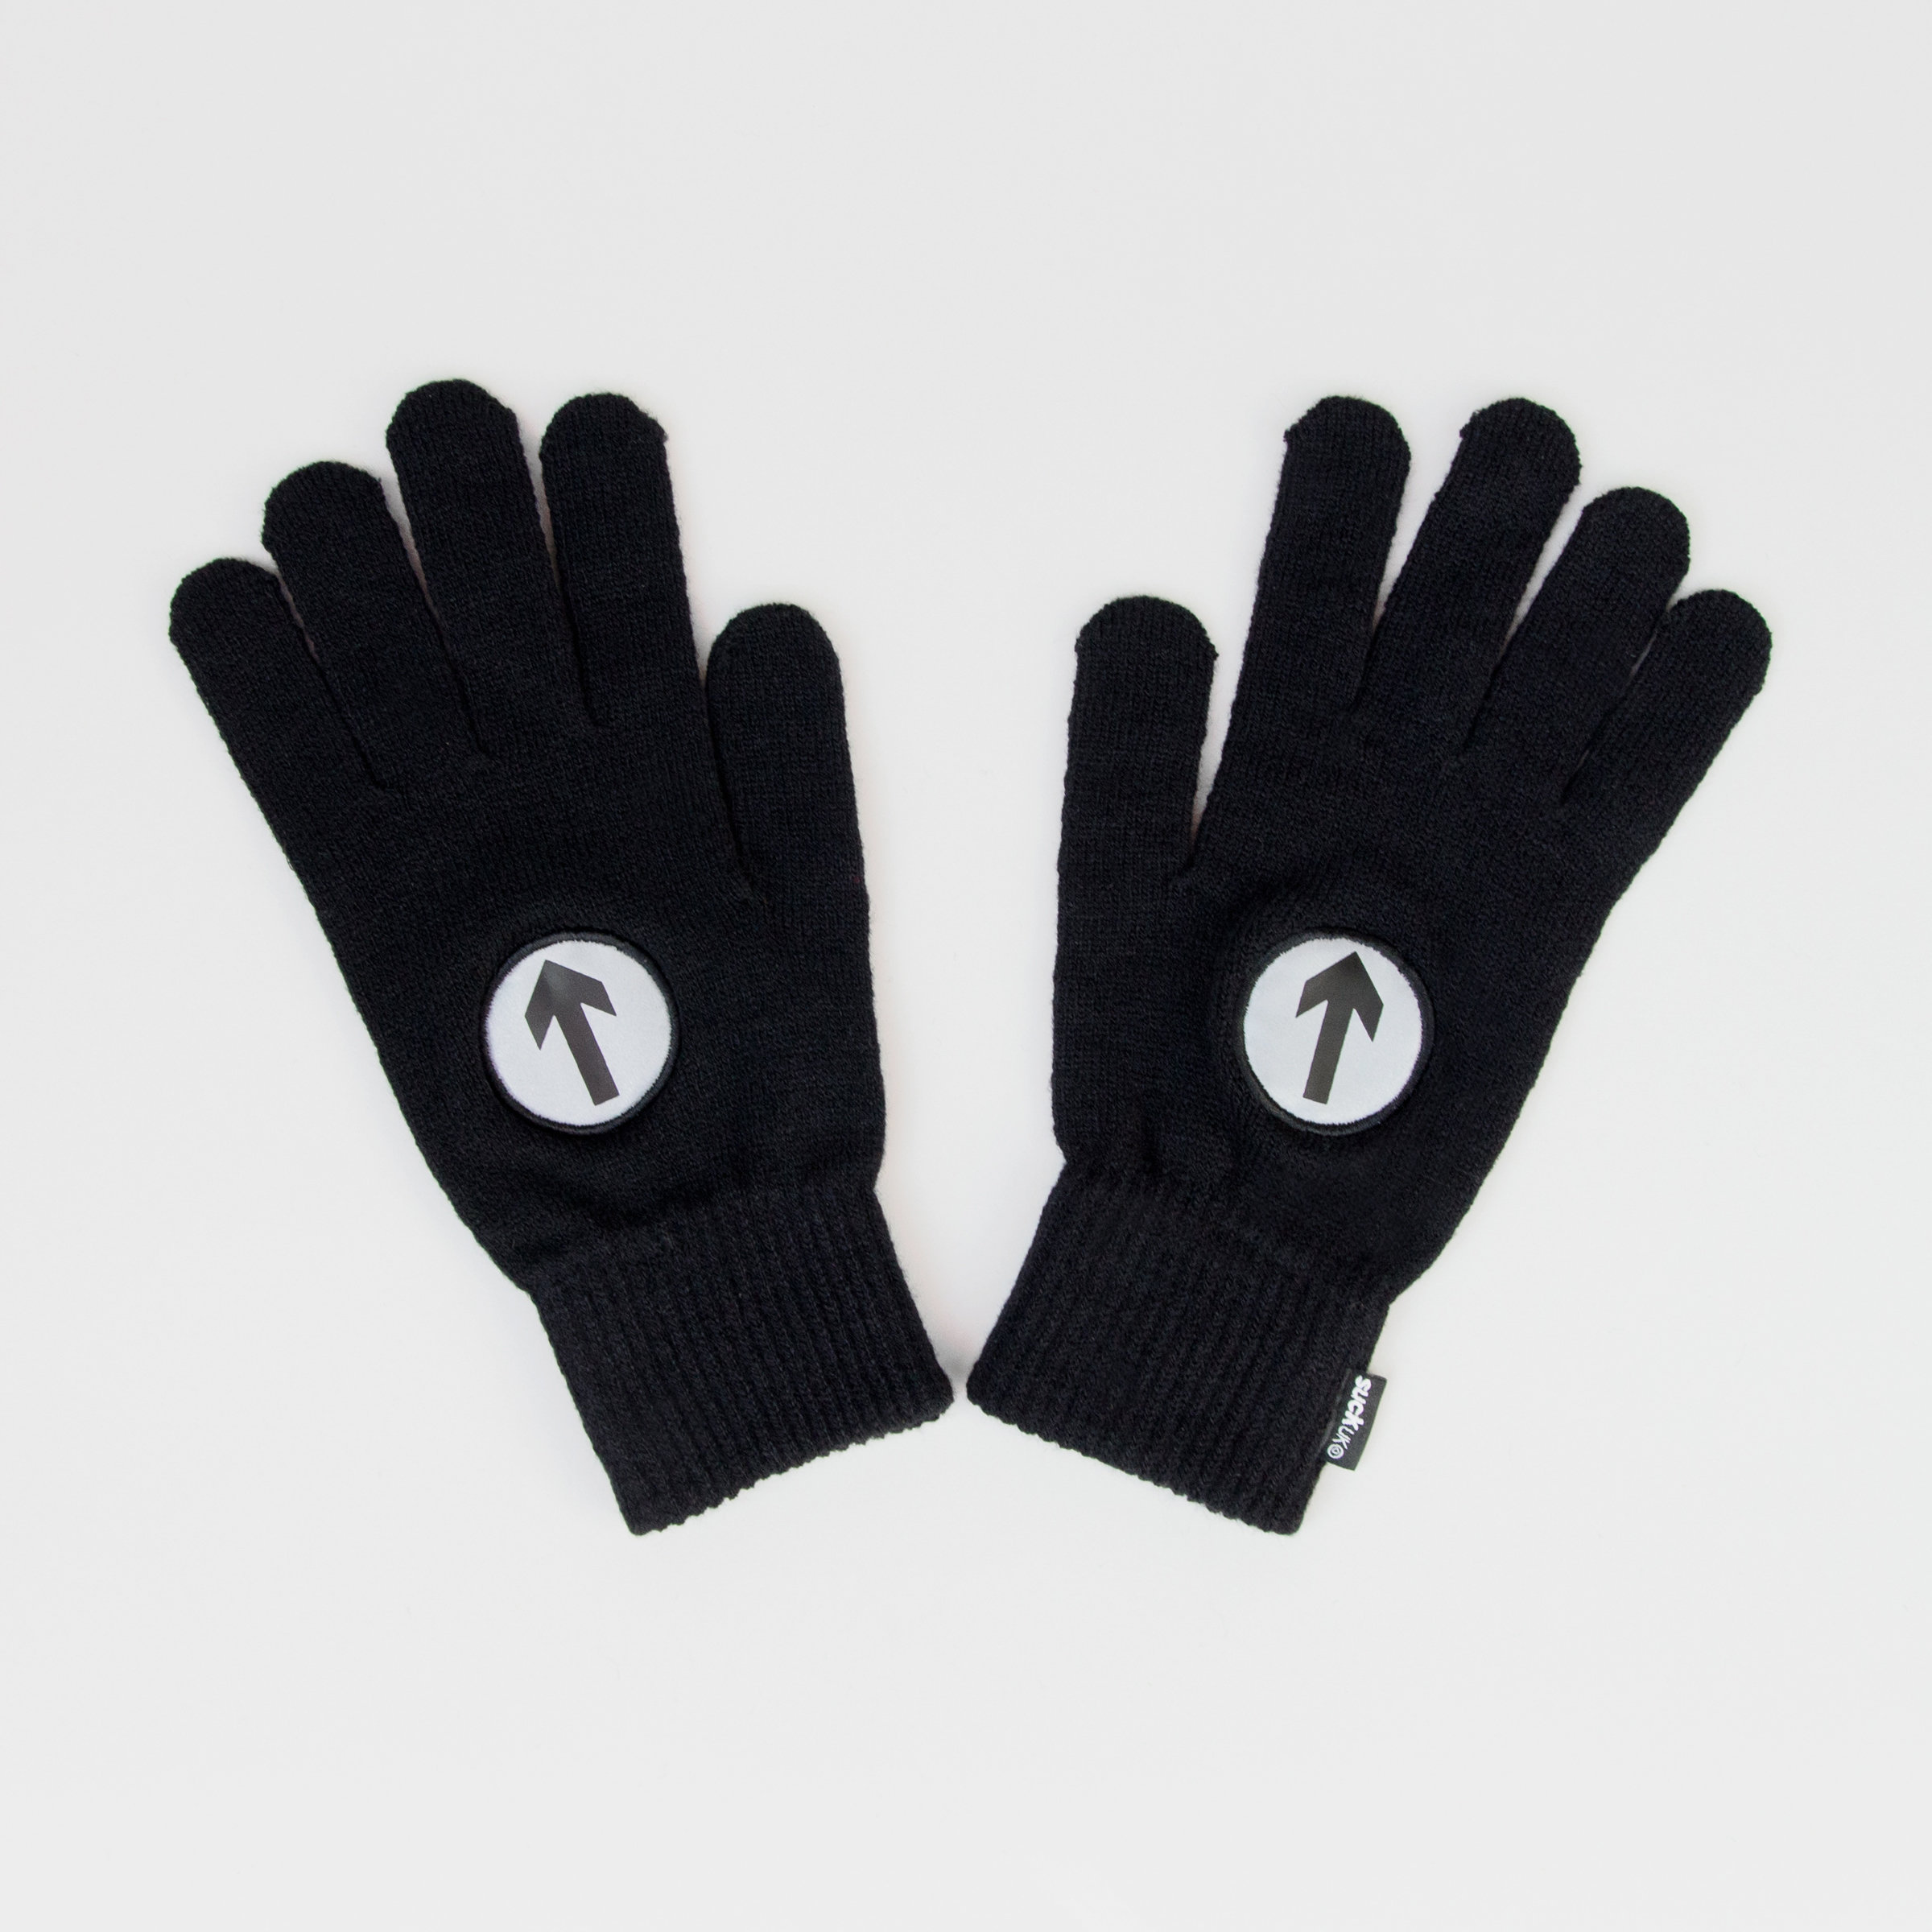 Reflective Bikler Gloves